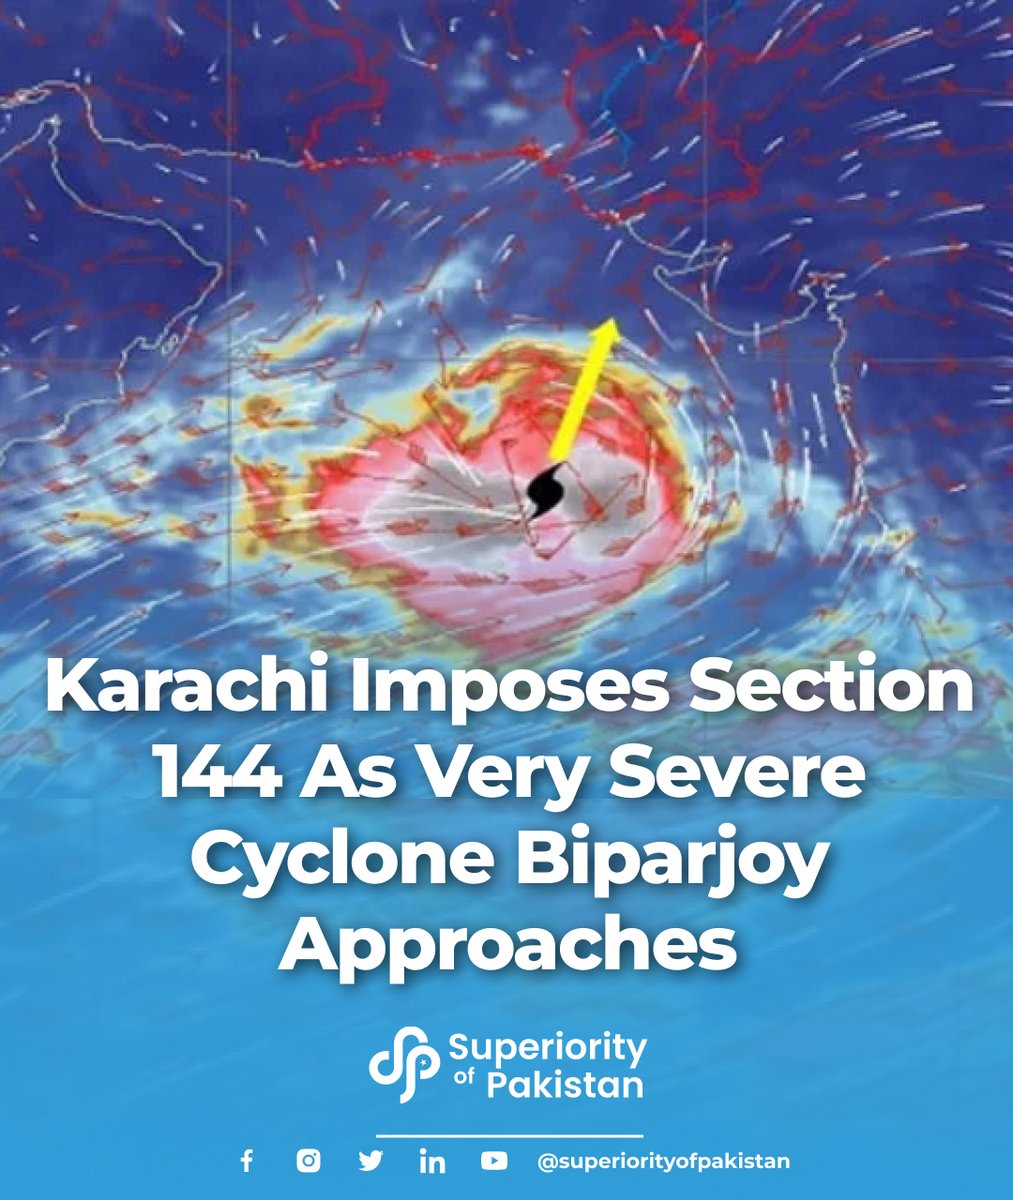 Read More: superiorityofpakistan.com/karachi-impose…

#Cyclone #Biparjoy #karachi #Section144 #Superiorityofpakistan #Breakingnews #LatestNews